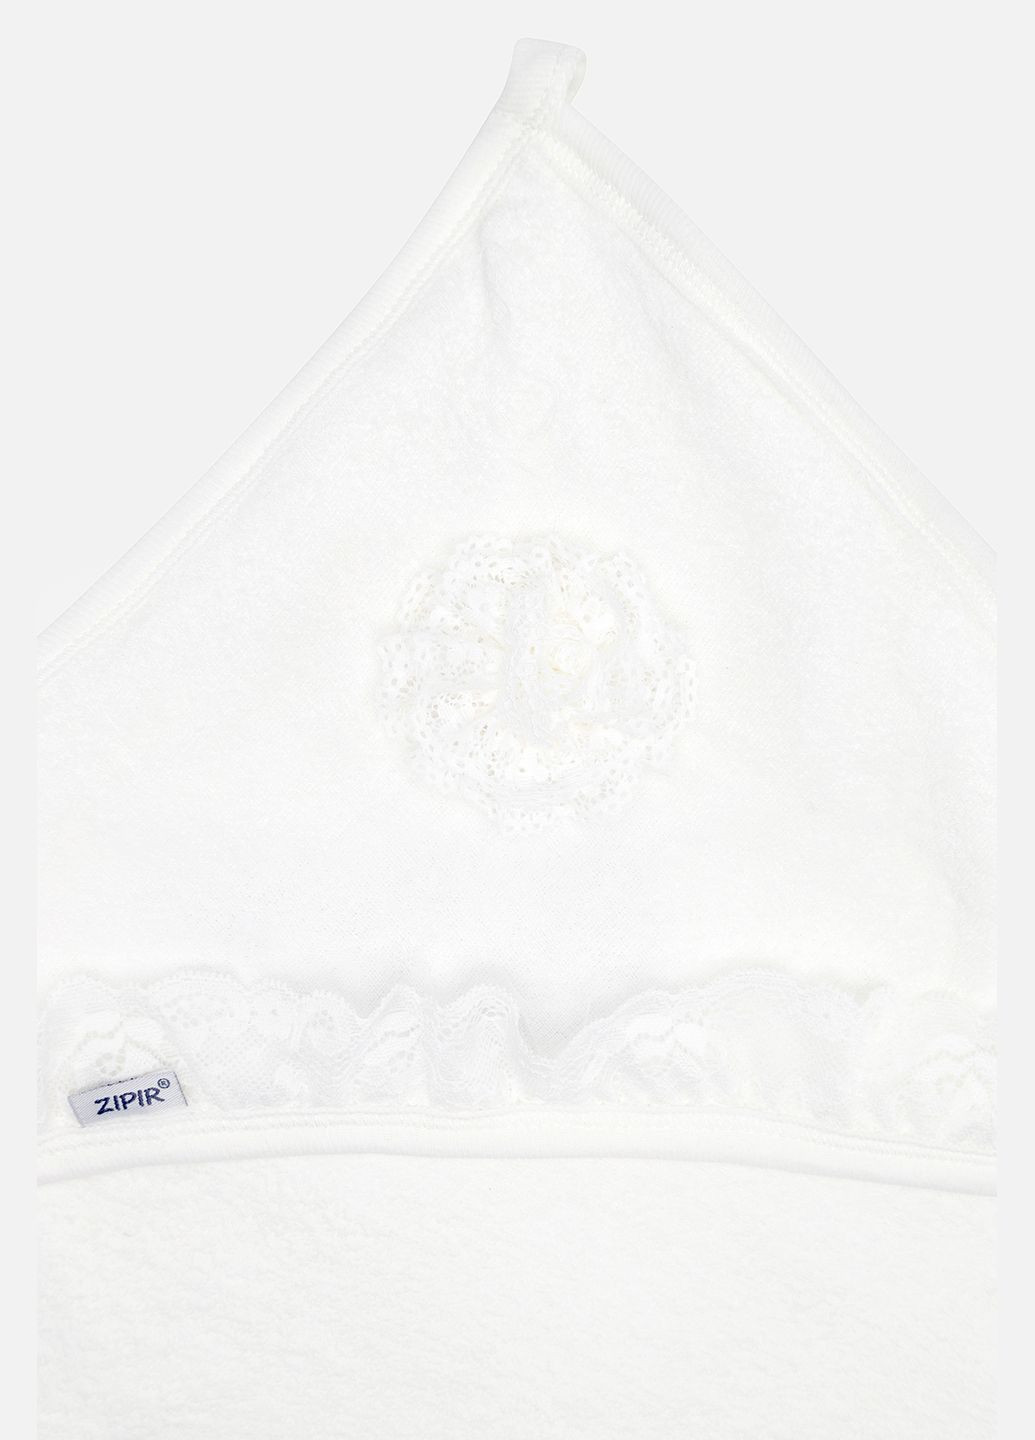 Zipir полотенце уголок для купания цвет молочный цб-00161552 молочный производство - Турция